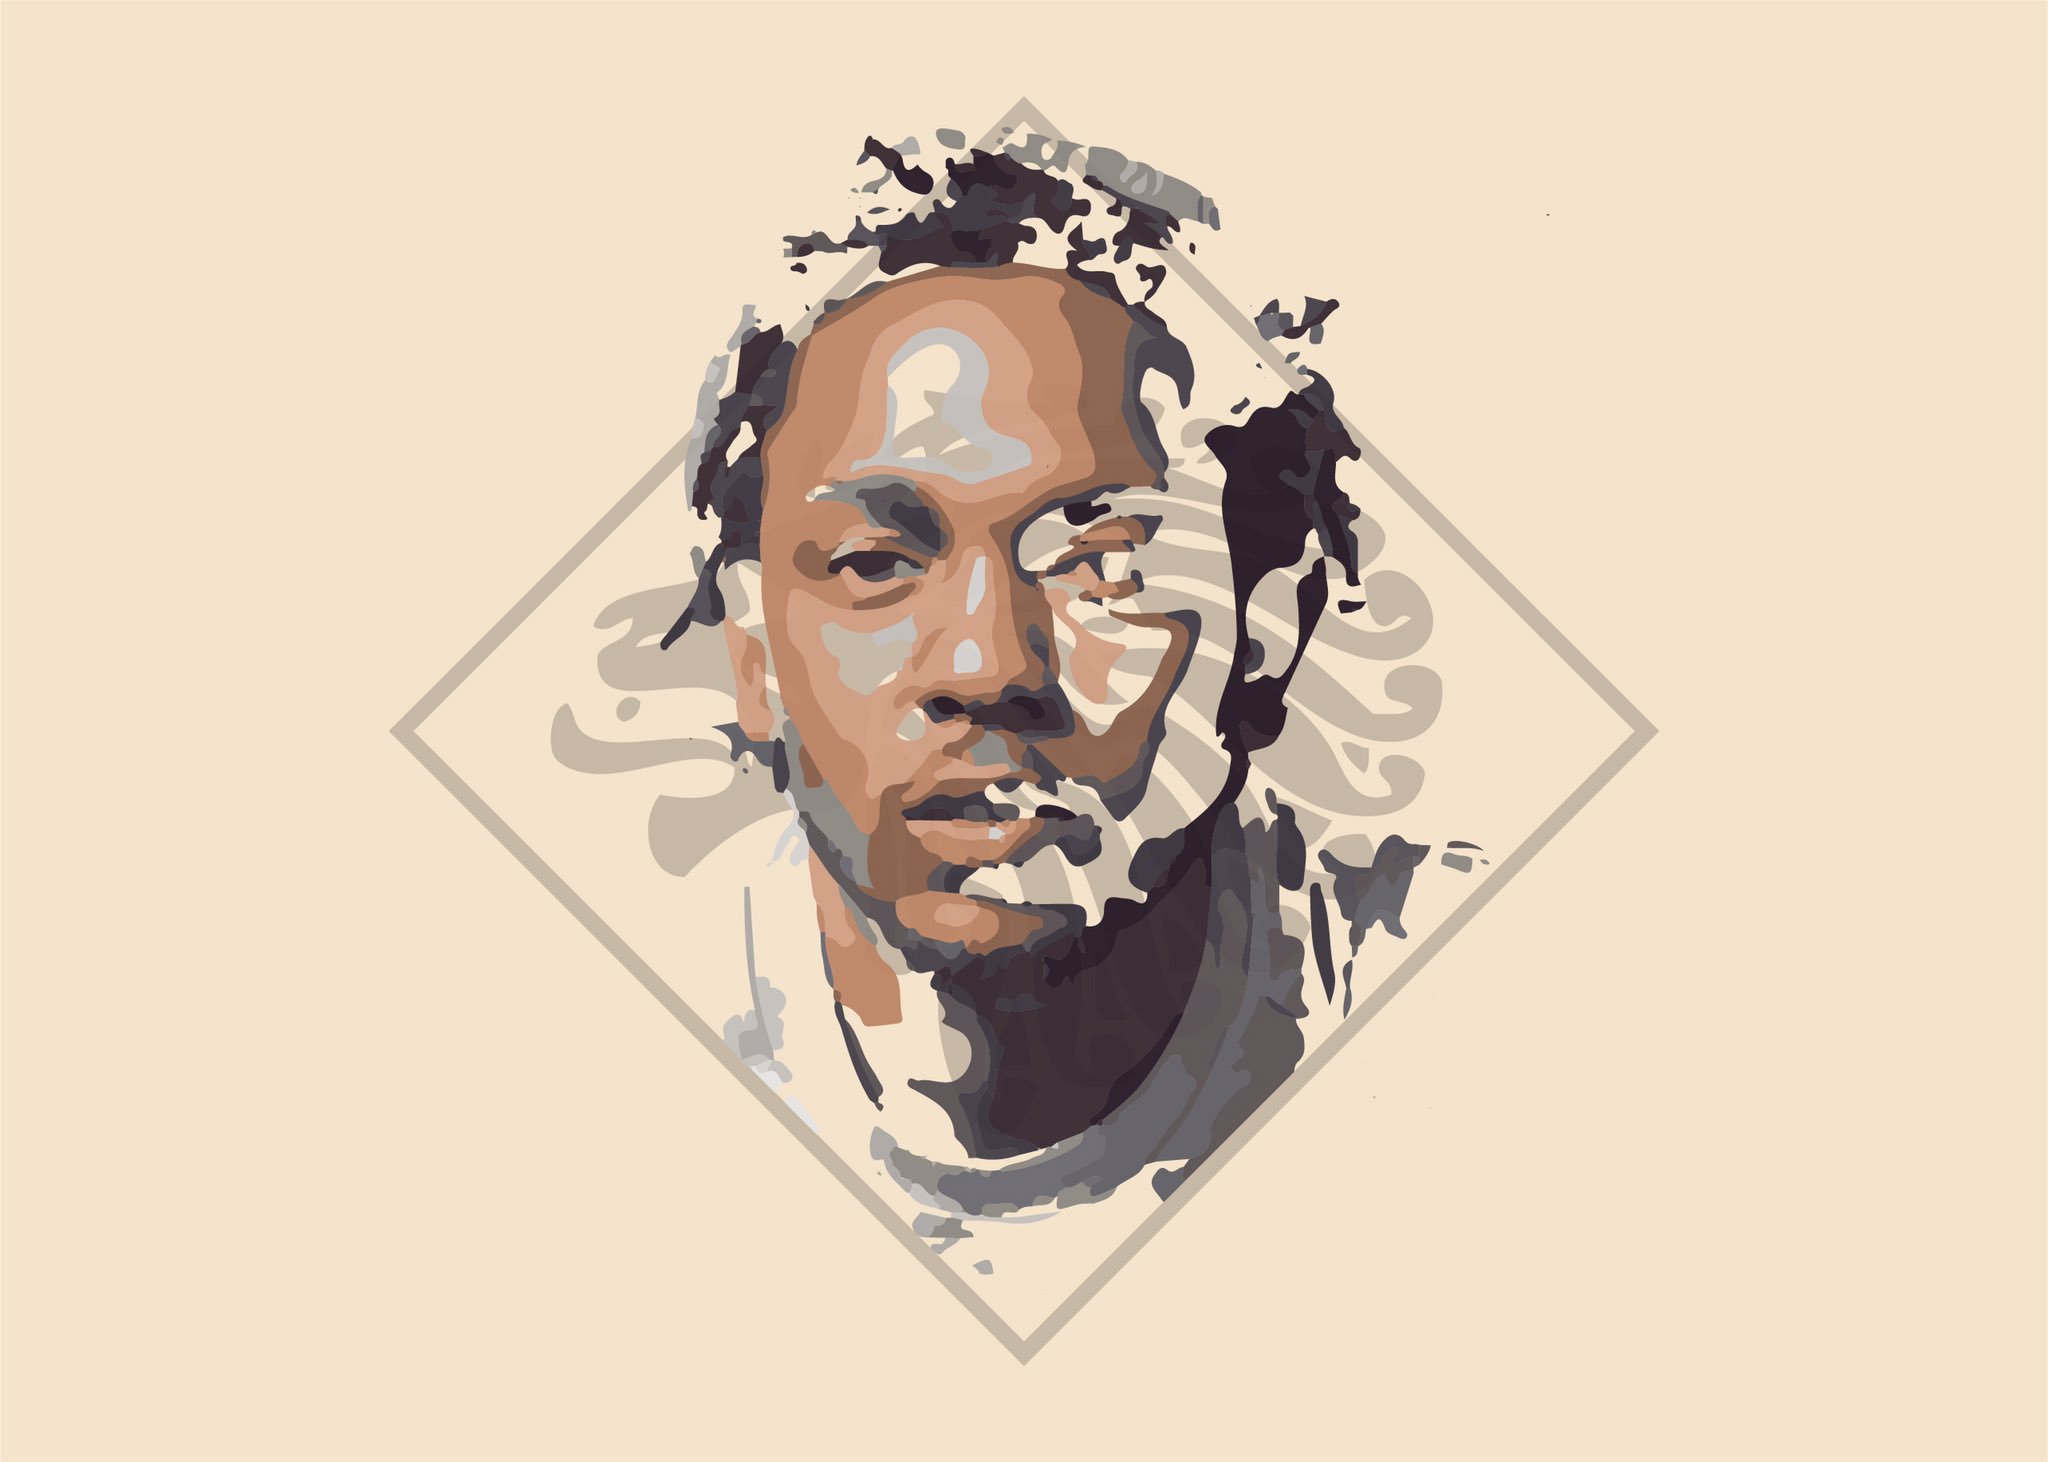 In tribute to the man himself: Kendrick Lamar Ducksworth. Happy 30th birthday G. 